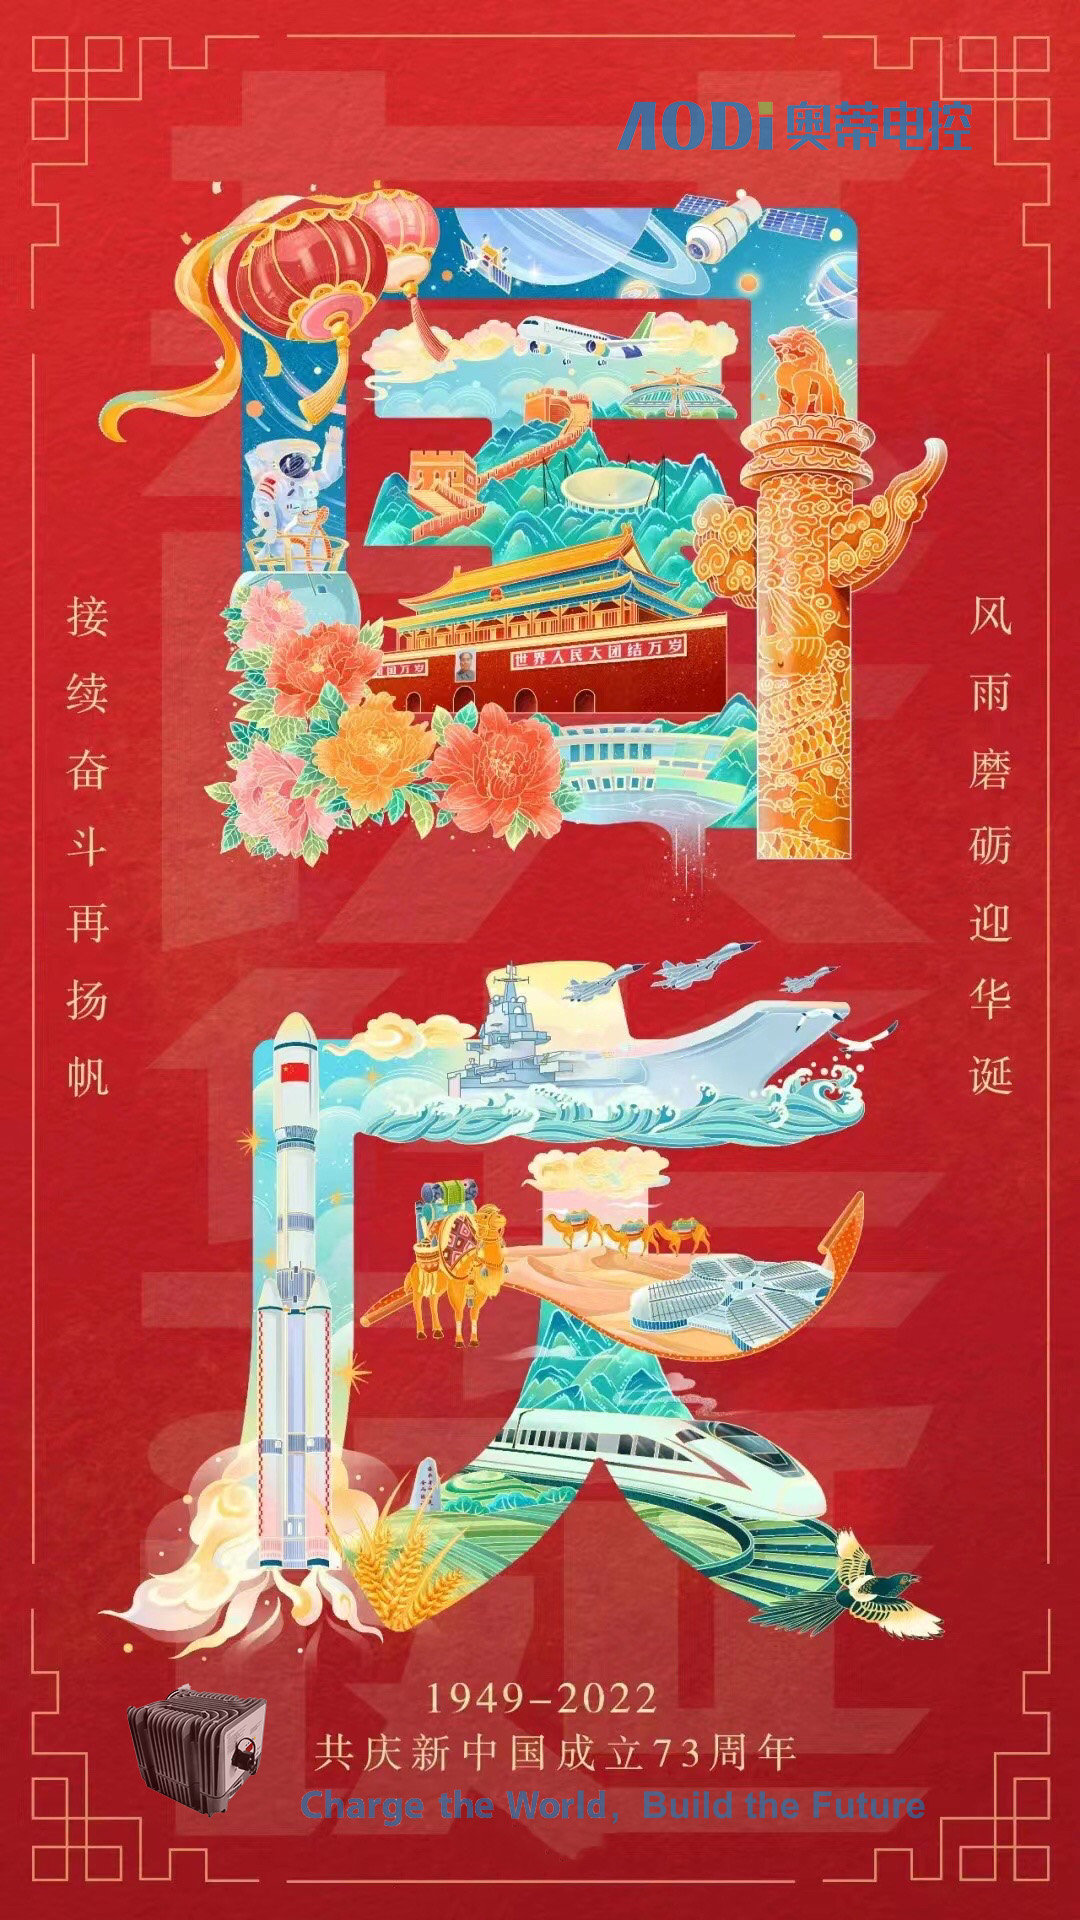 Happy Chinese National Day 2022 国庆节快乐